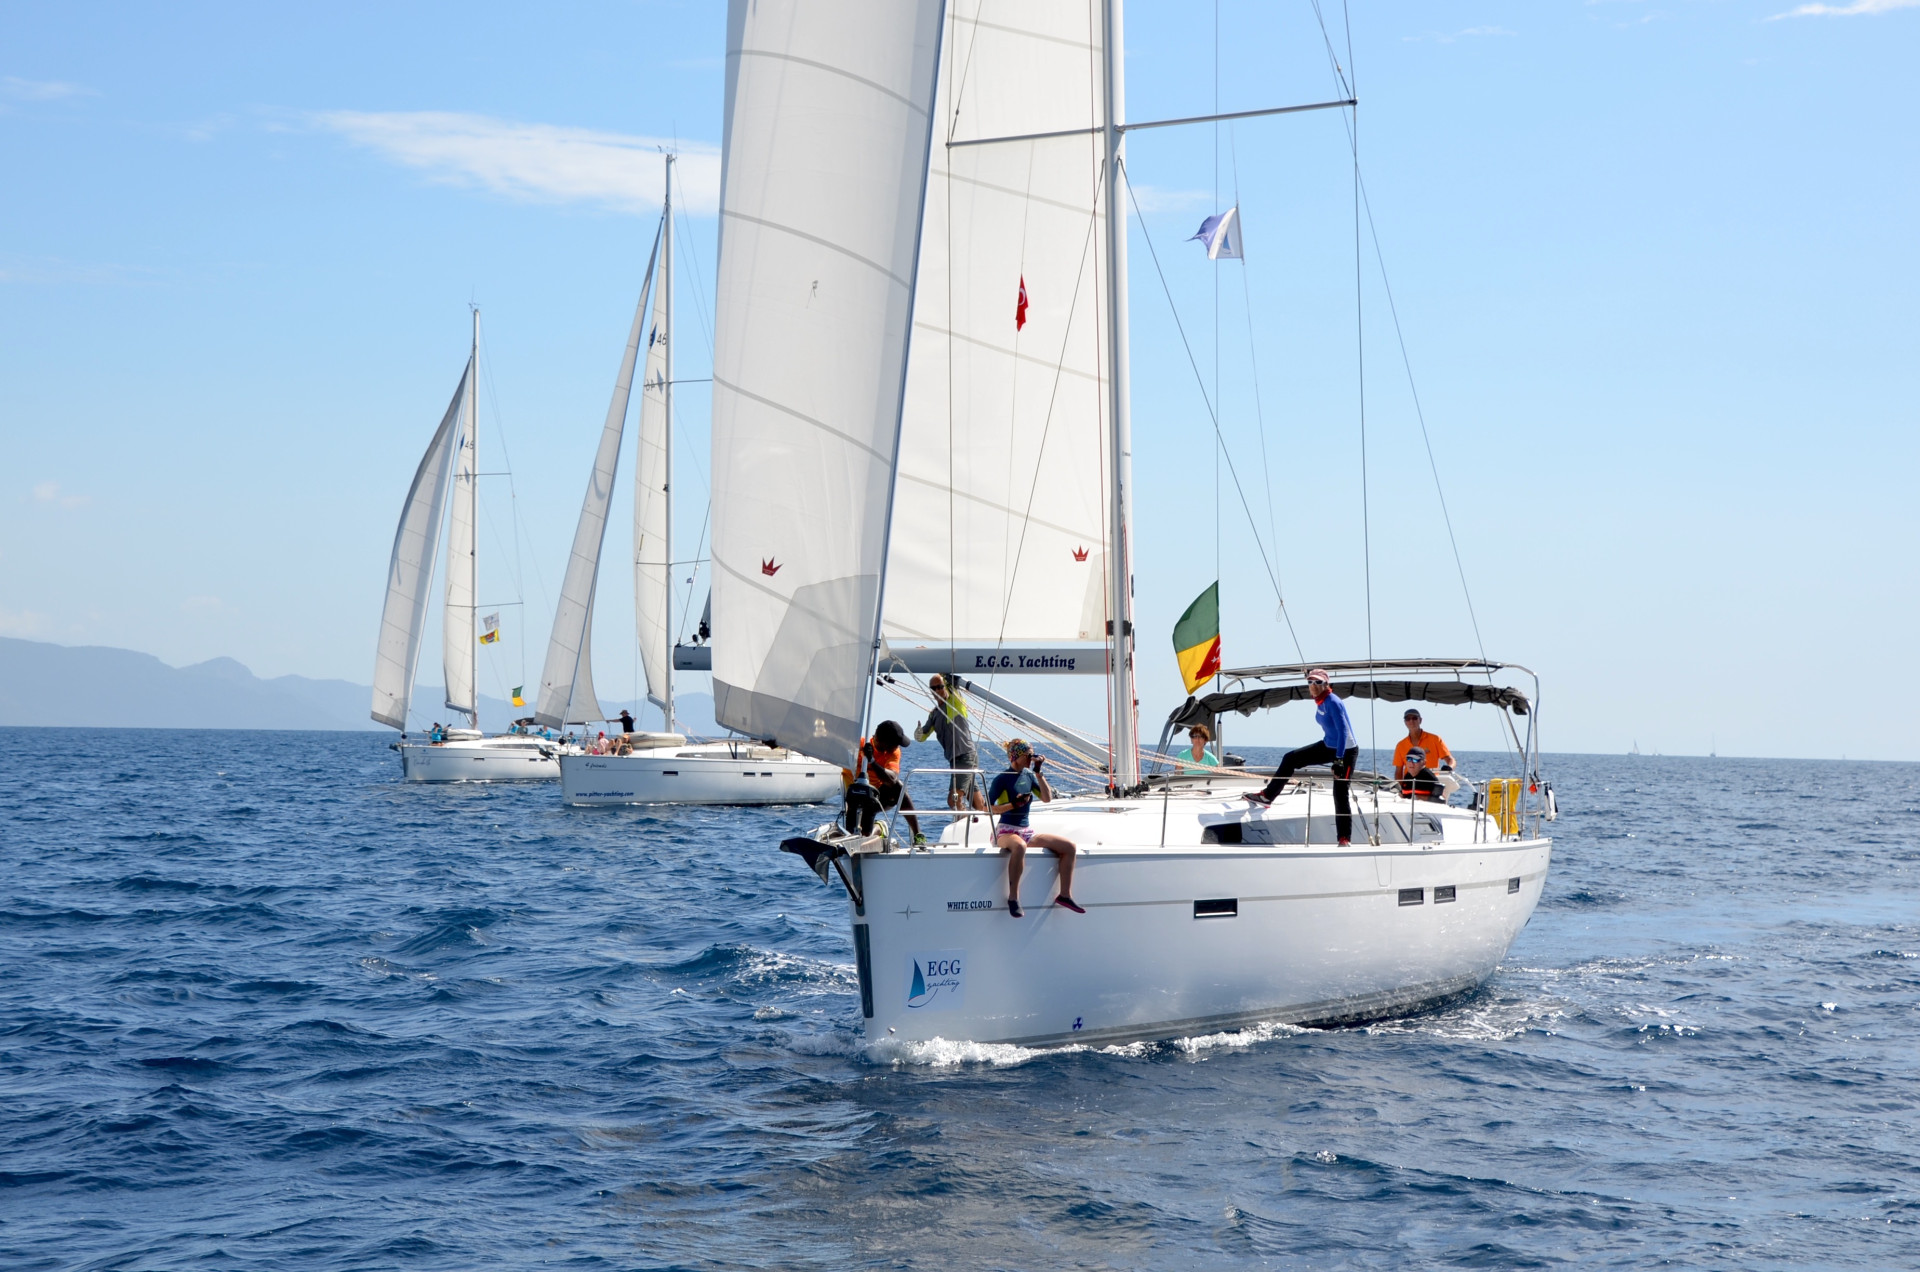 The winning team, HPYF sailing